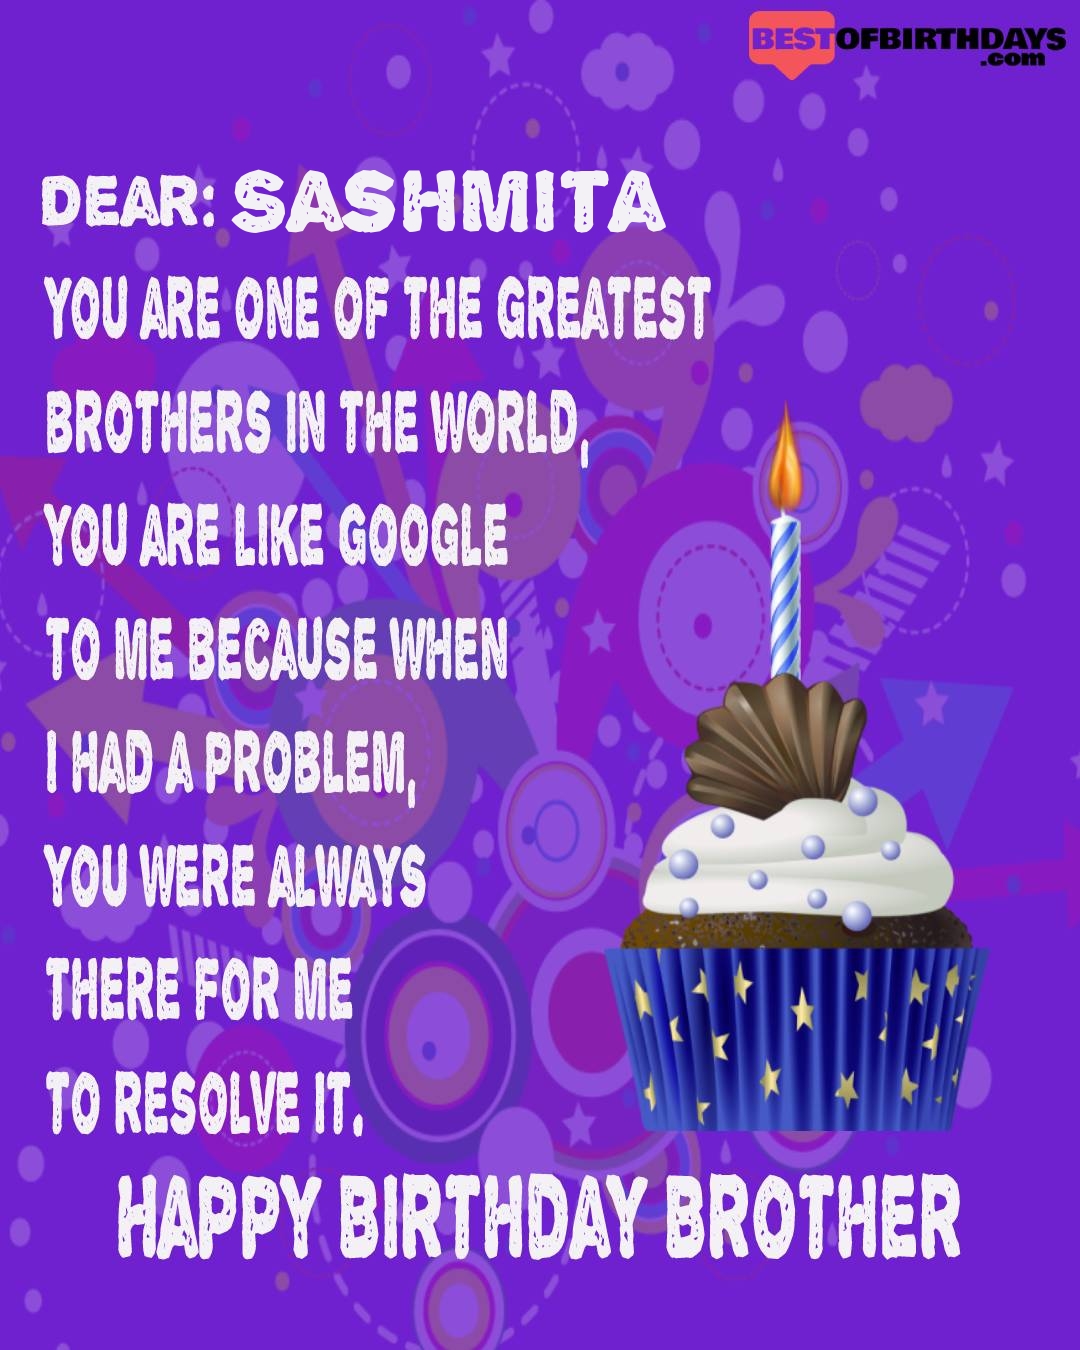 Happy birthday sashmita bhai brother bro